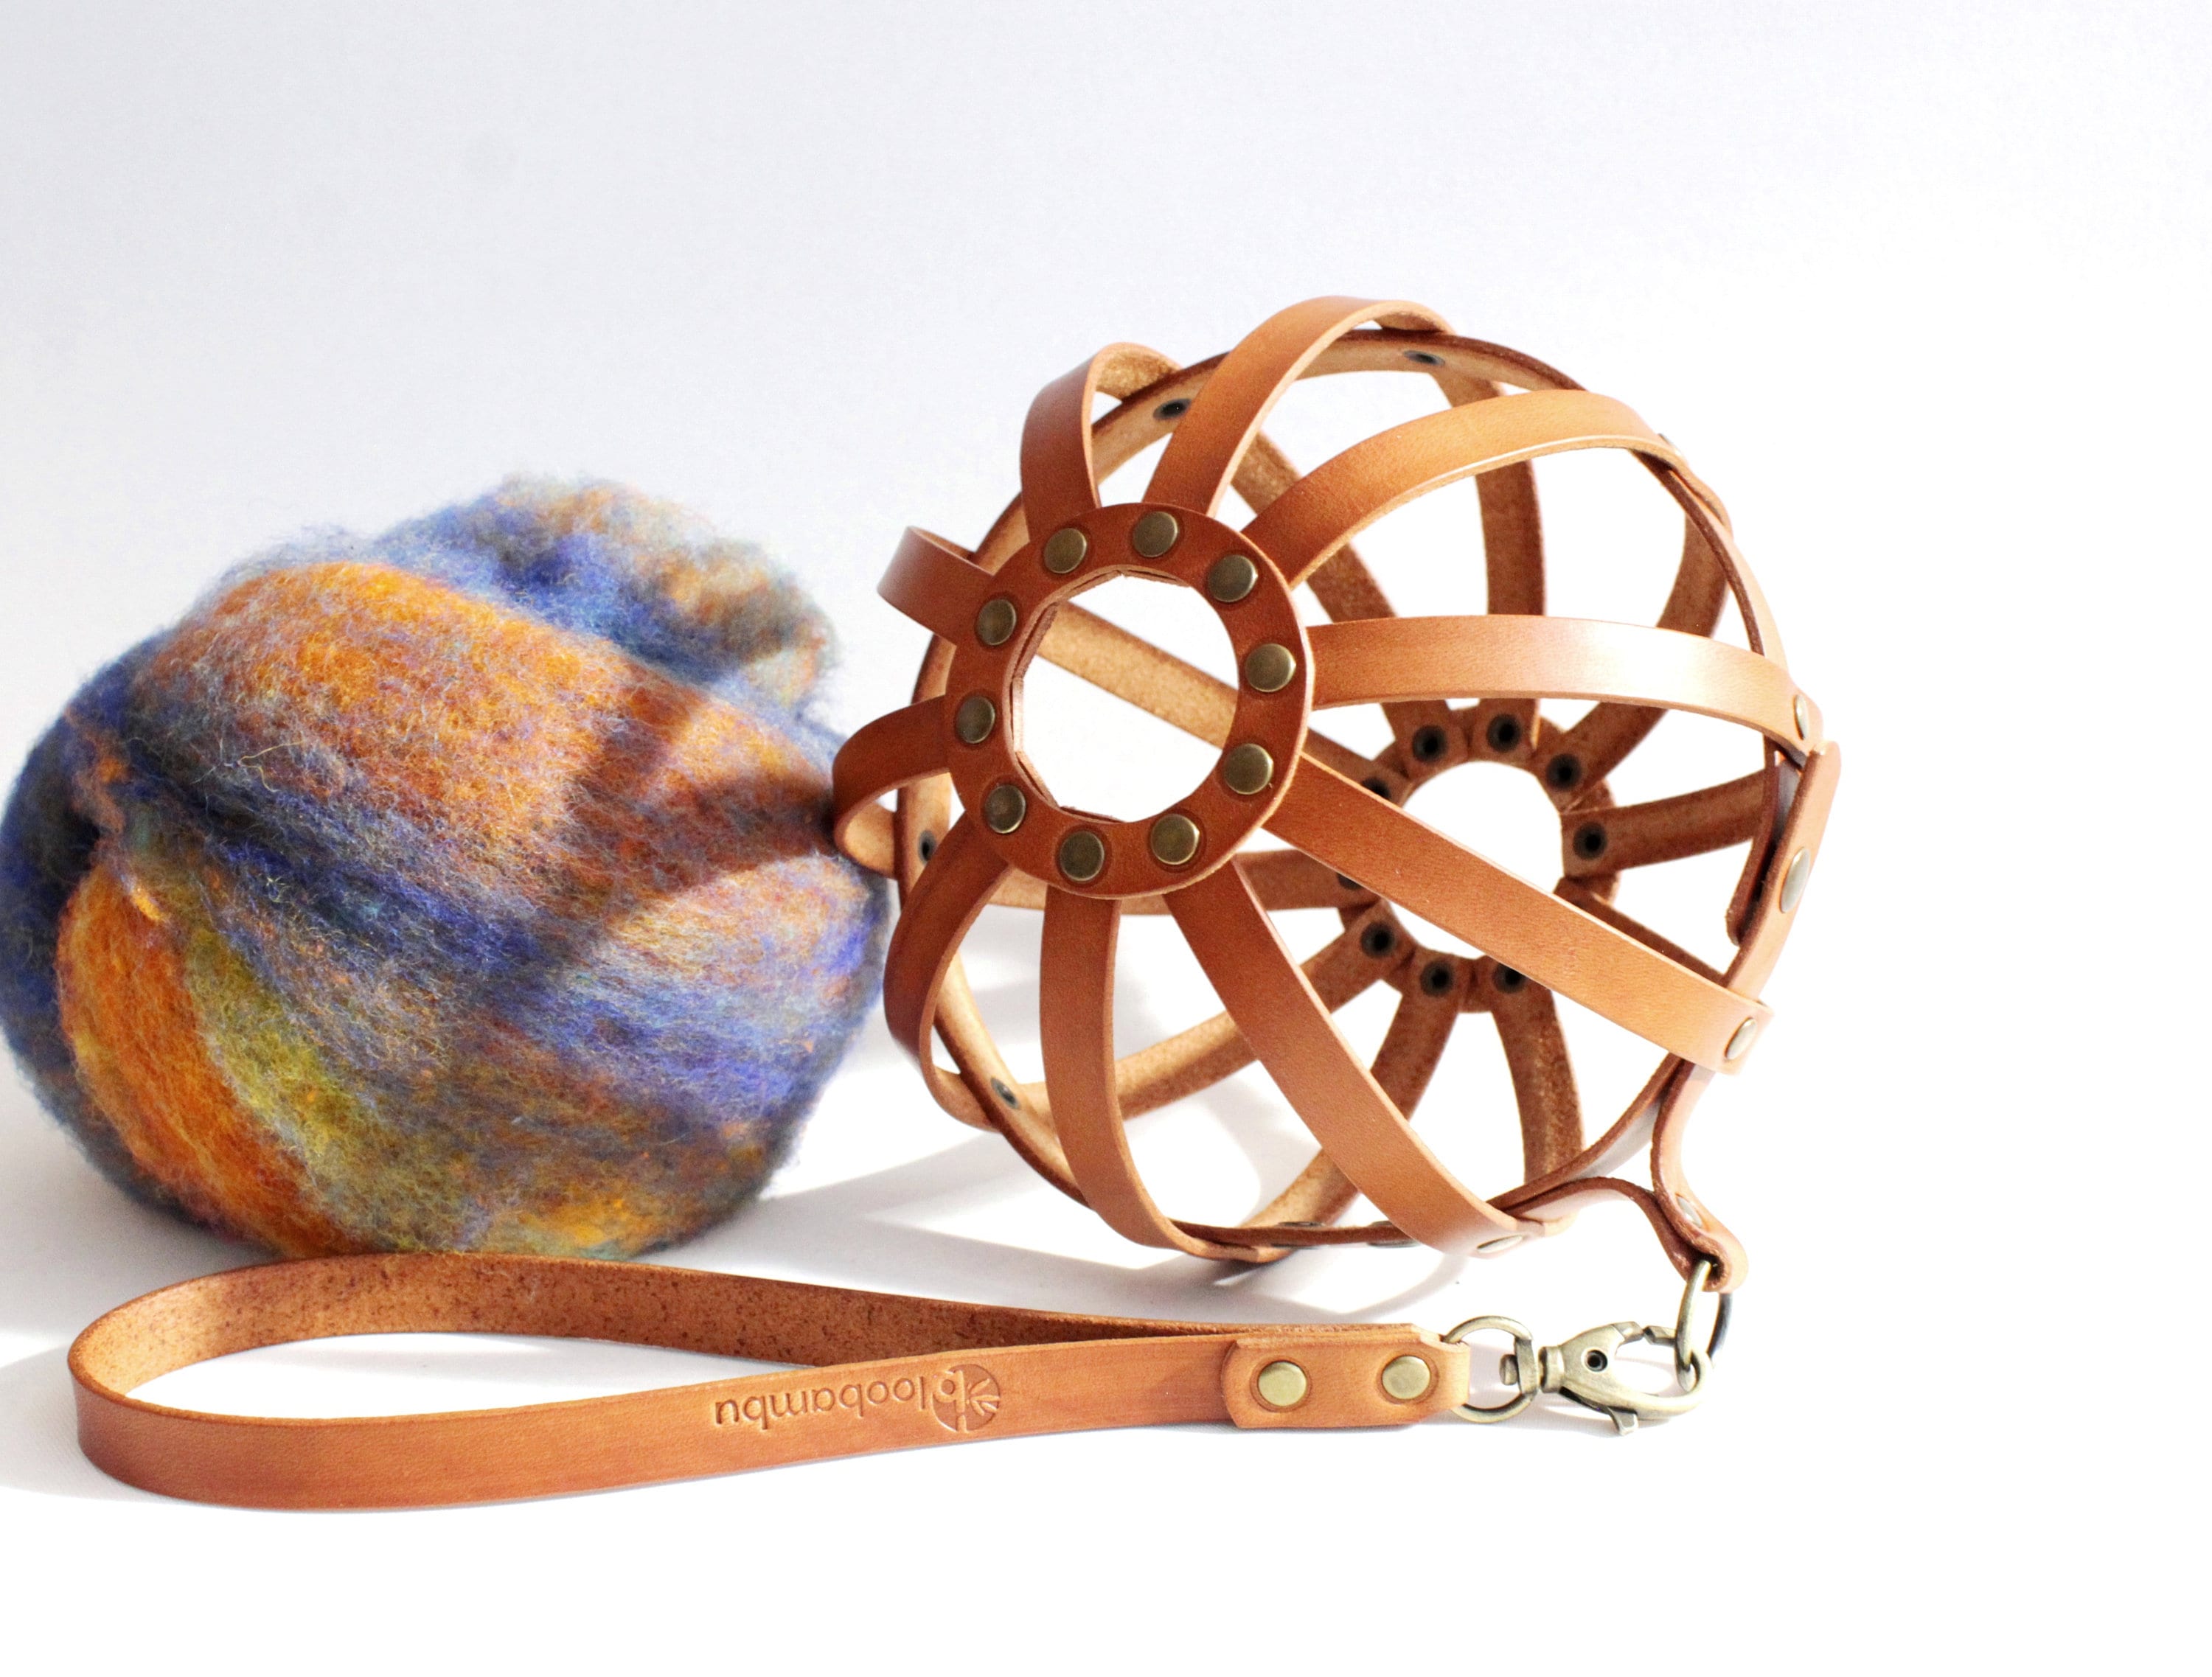 ADJUSTABLE Yarn Holder, Knitting and Crochet Supplies Organizer